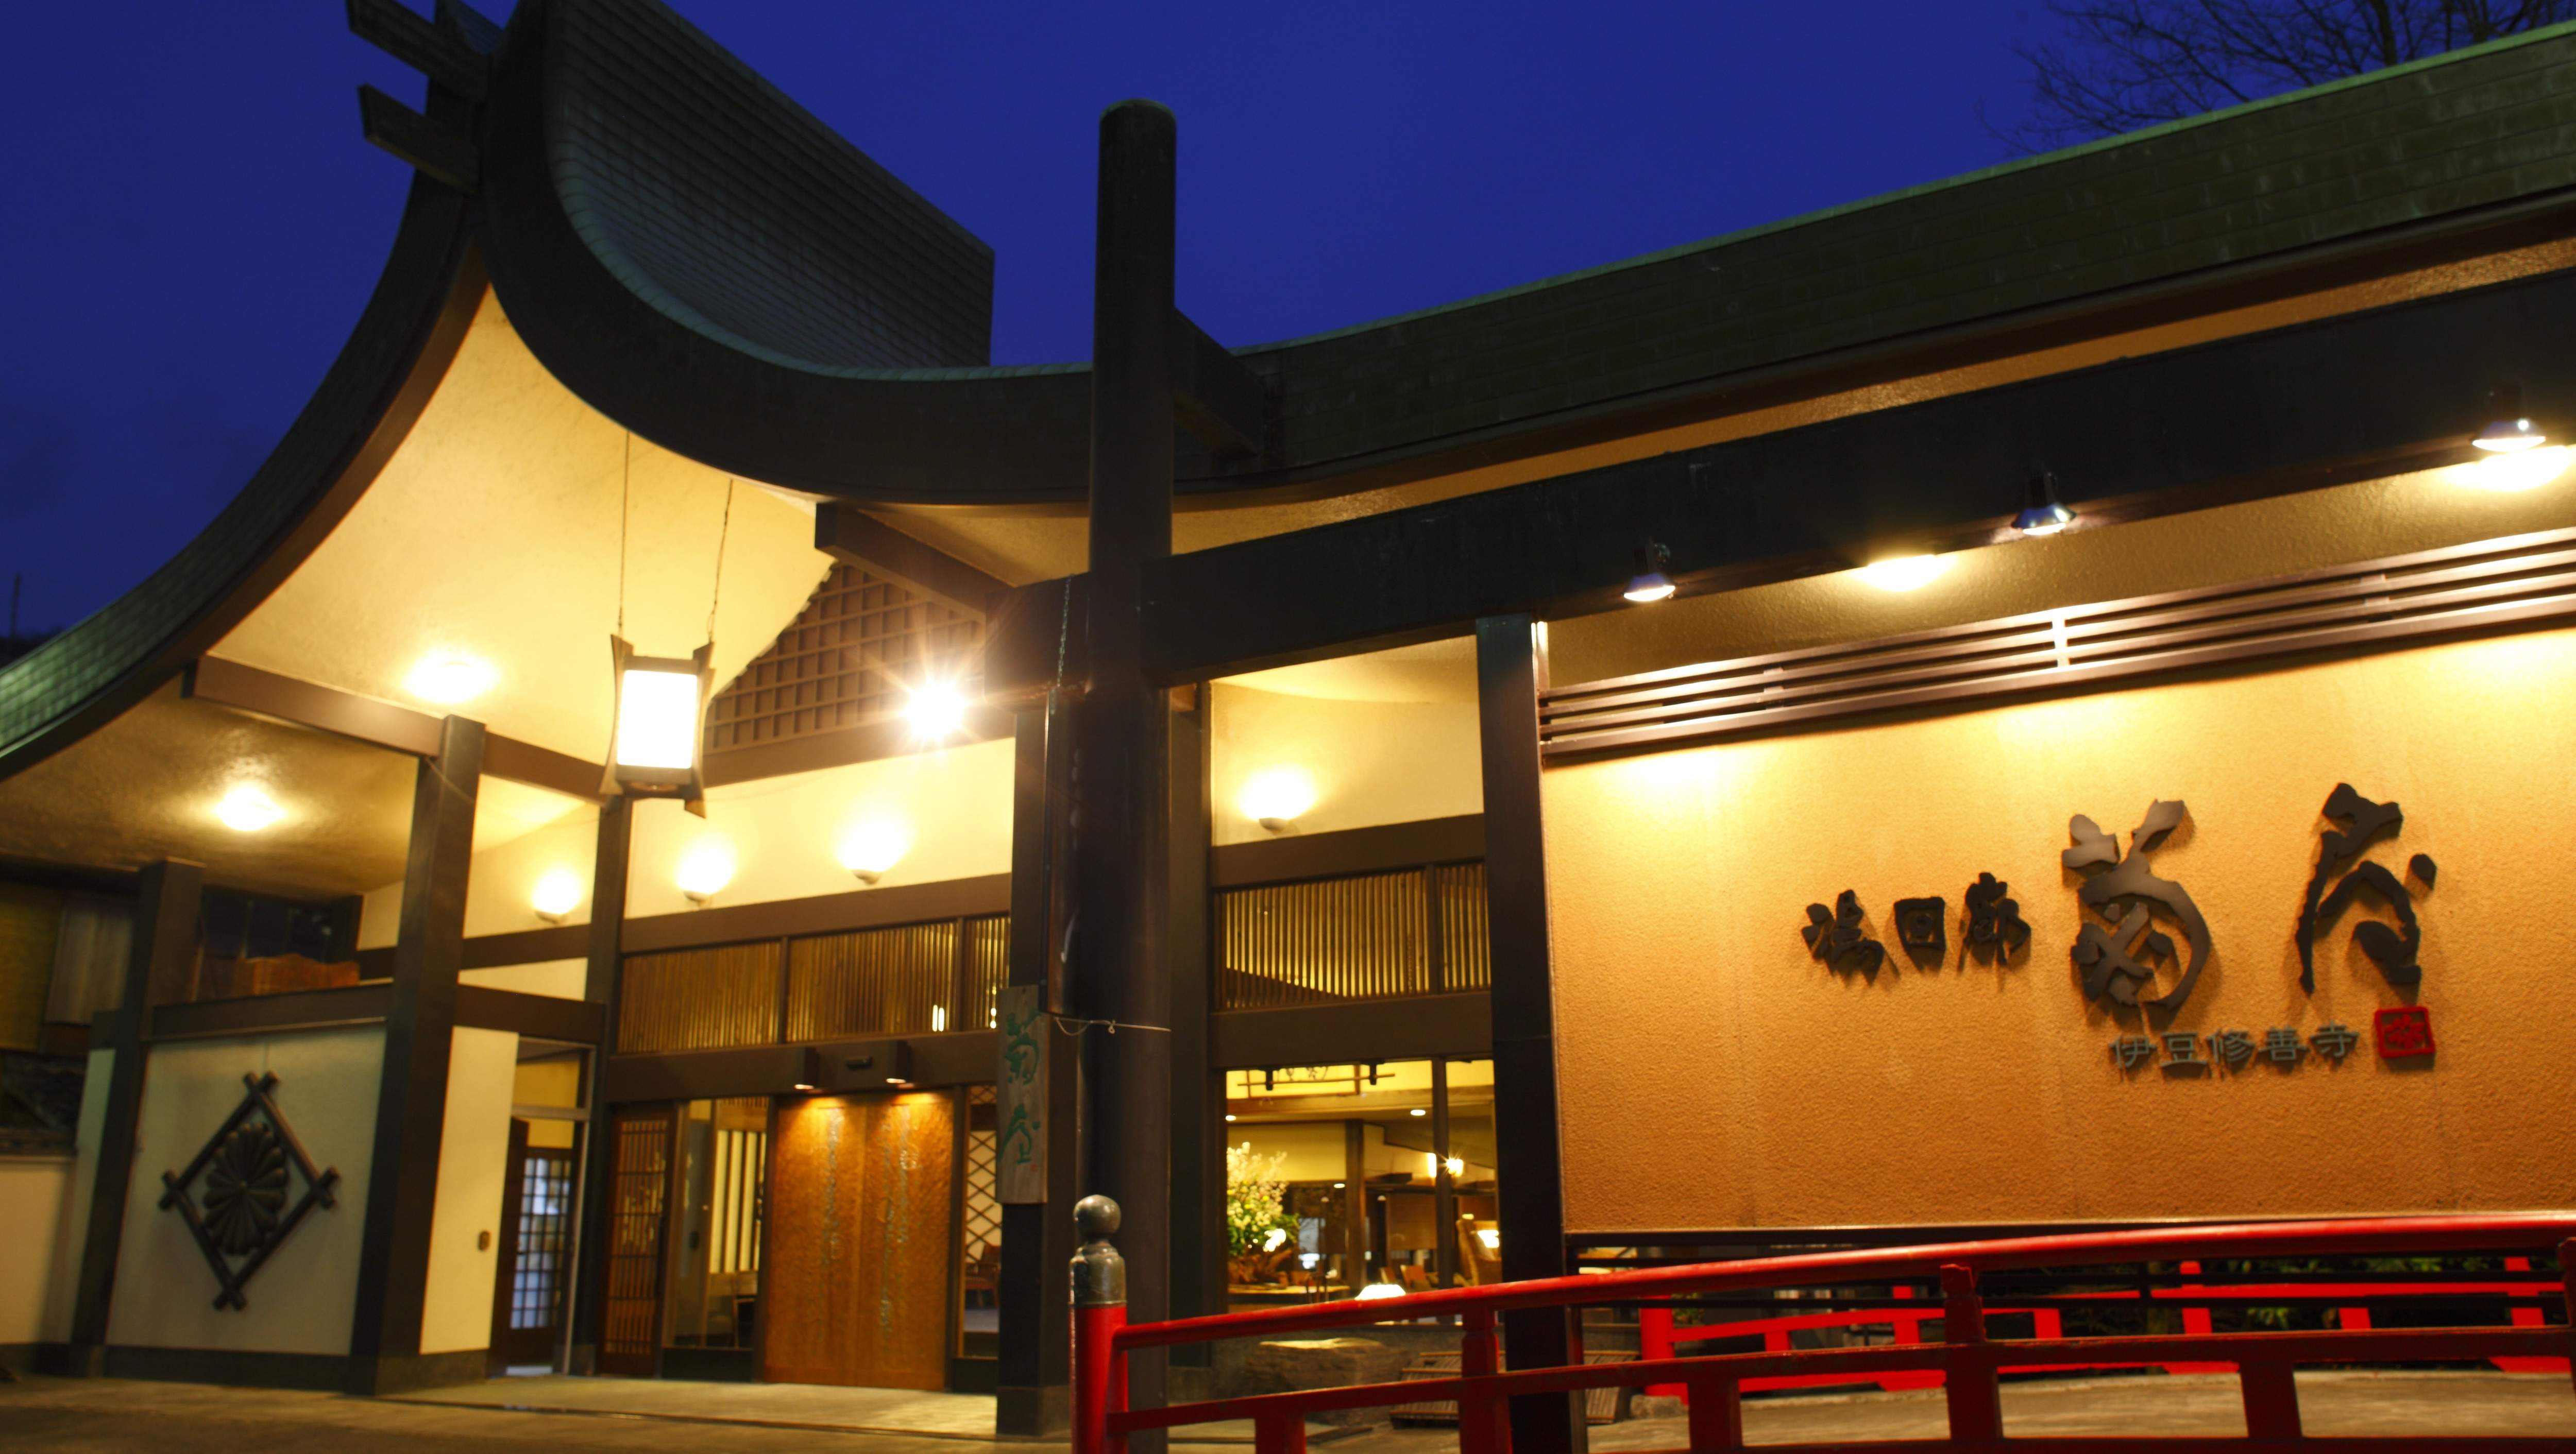 Hotel information and reservations for Shuzenji Onsen Yukairo